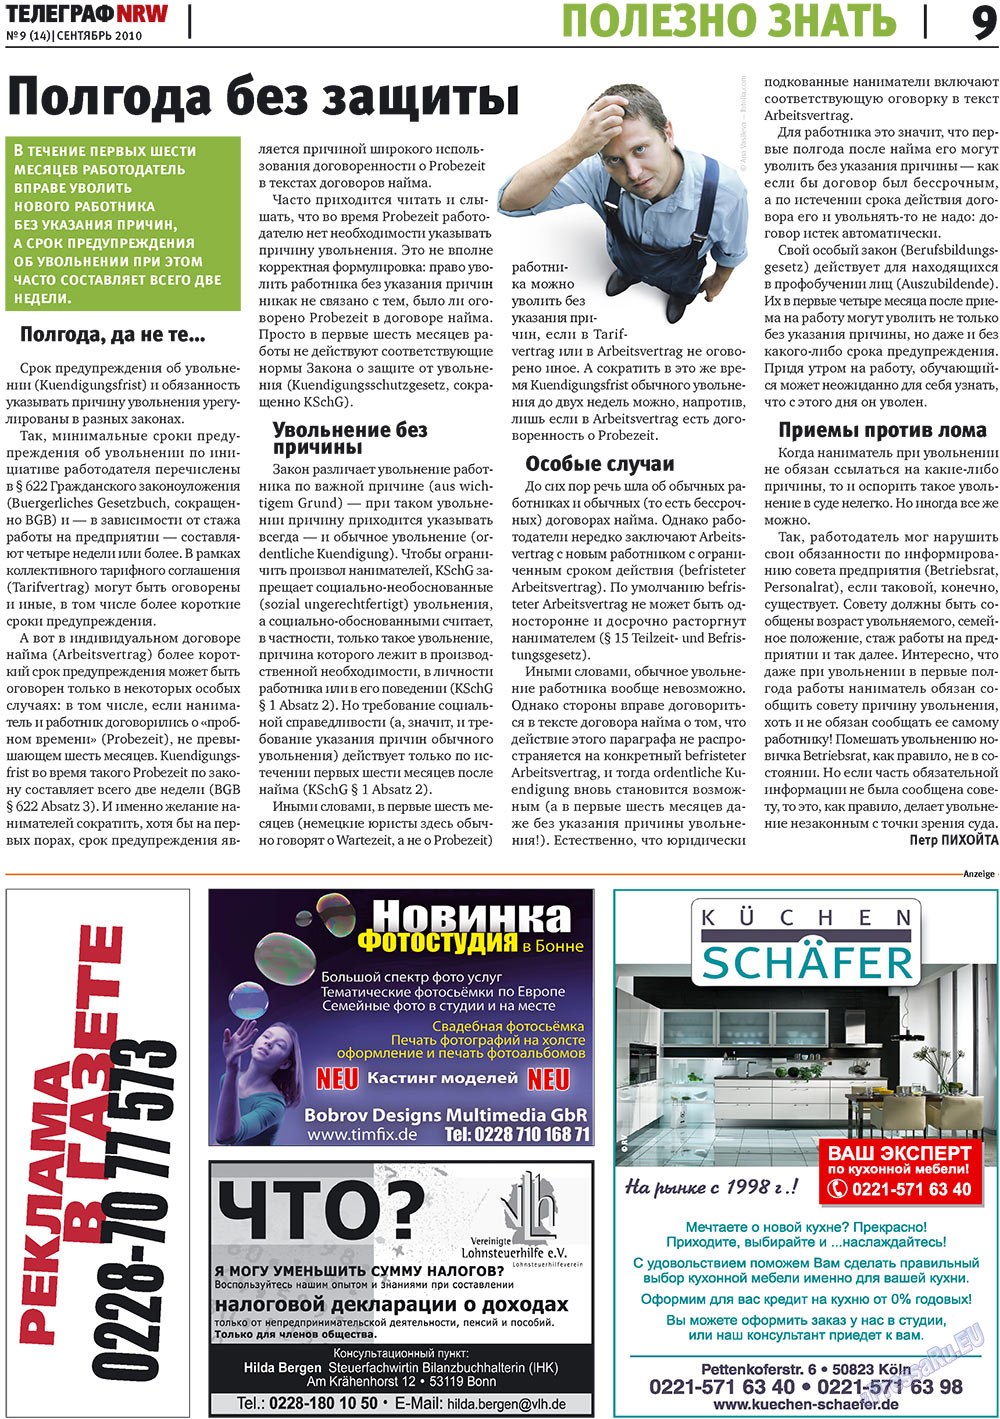 Телеграф NRW, газета. 2010 №9 стр.9